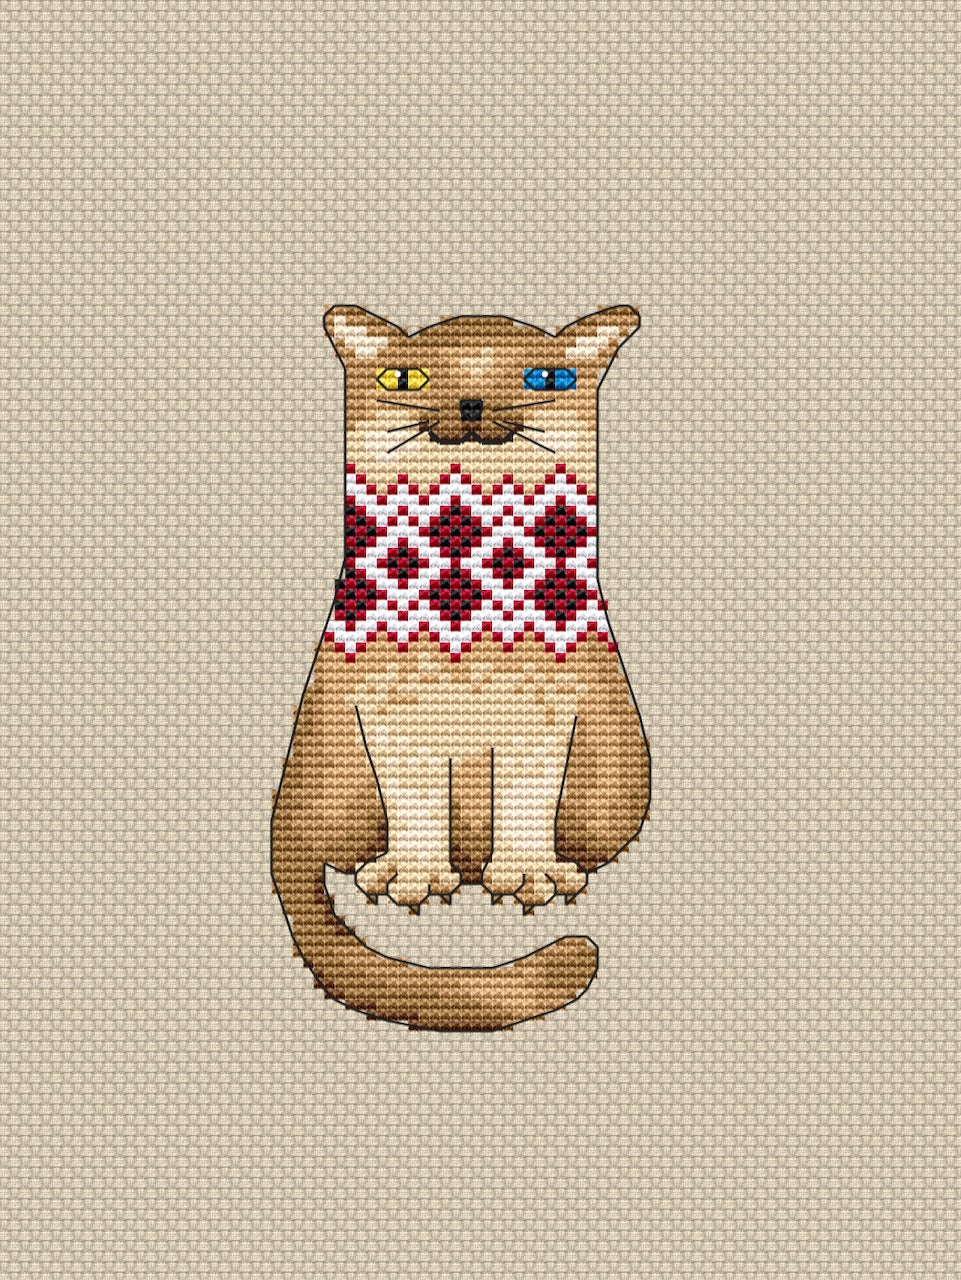 Ukrainian cat - cross stitch pattern